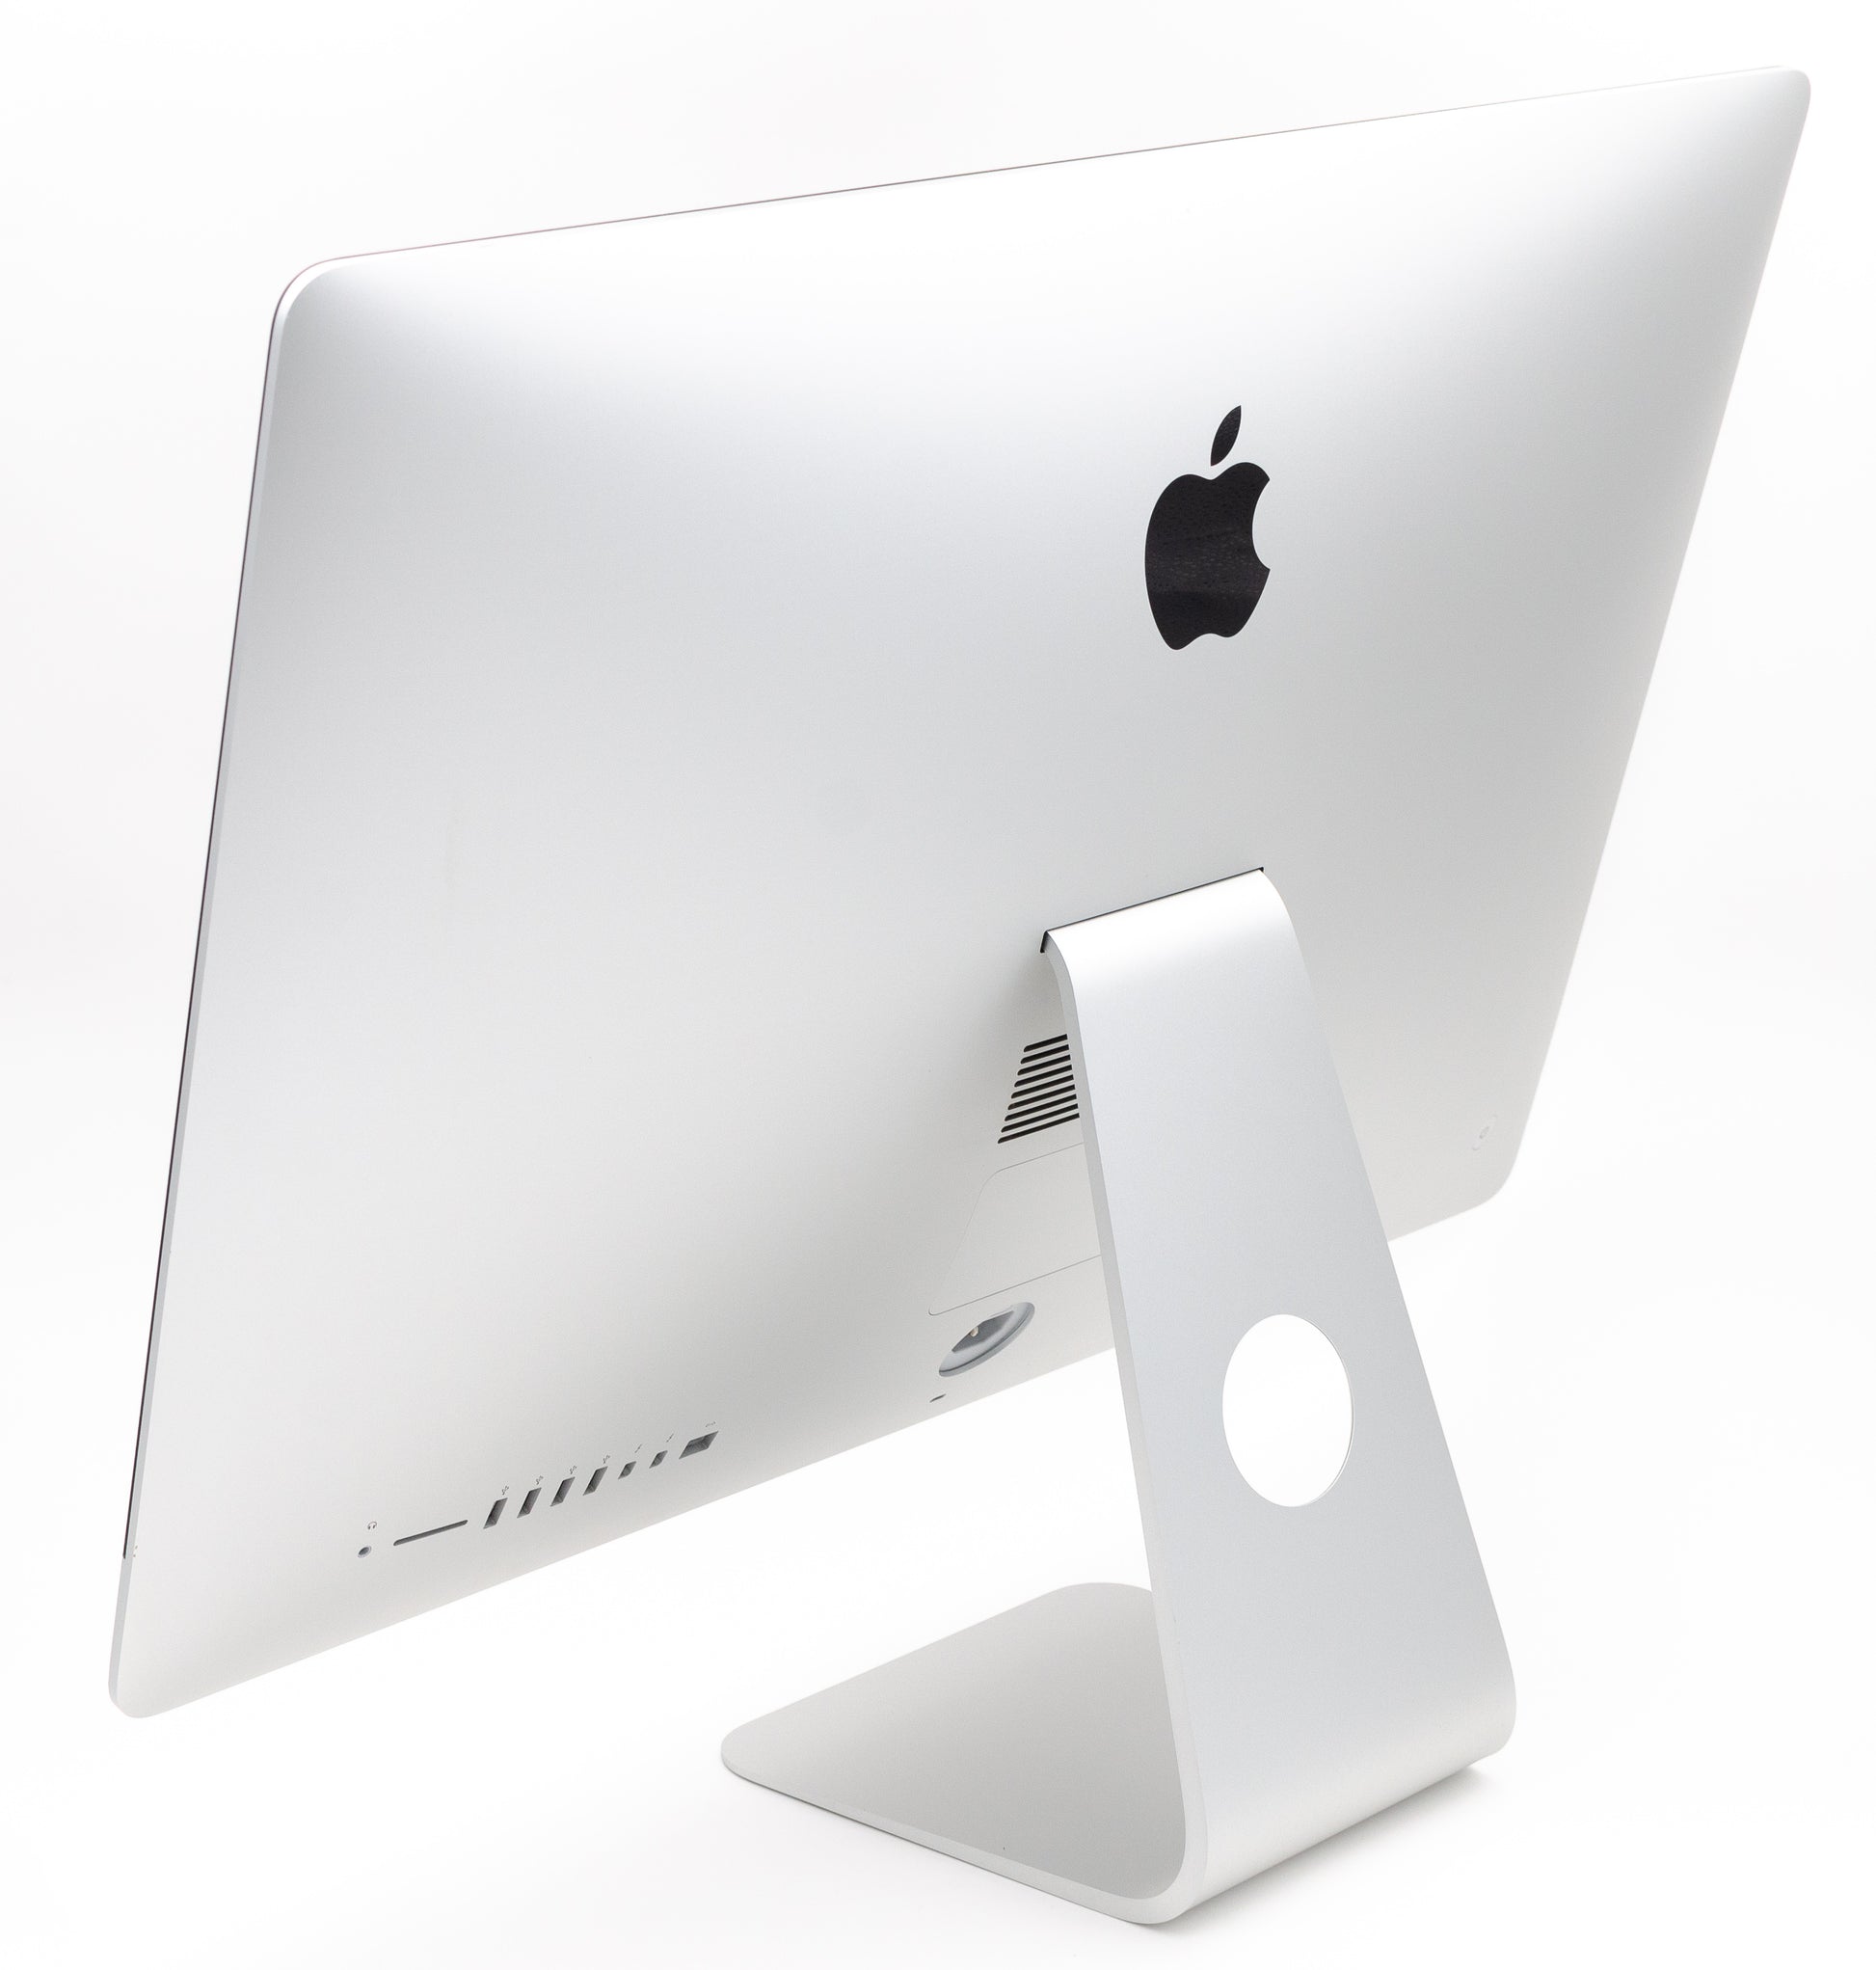 apple-late-2013-27-inch-imac-ultra-thin-a1419-aluminum-qci5 - 3.2ghz, 8gb ram, gtx 755m - 1gb gpu-2